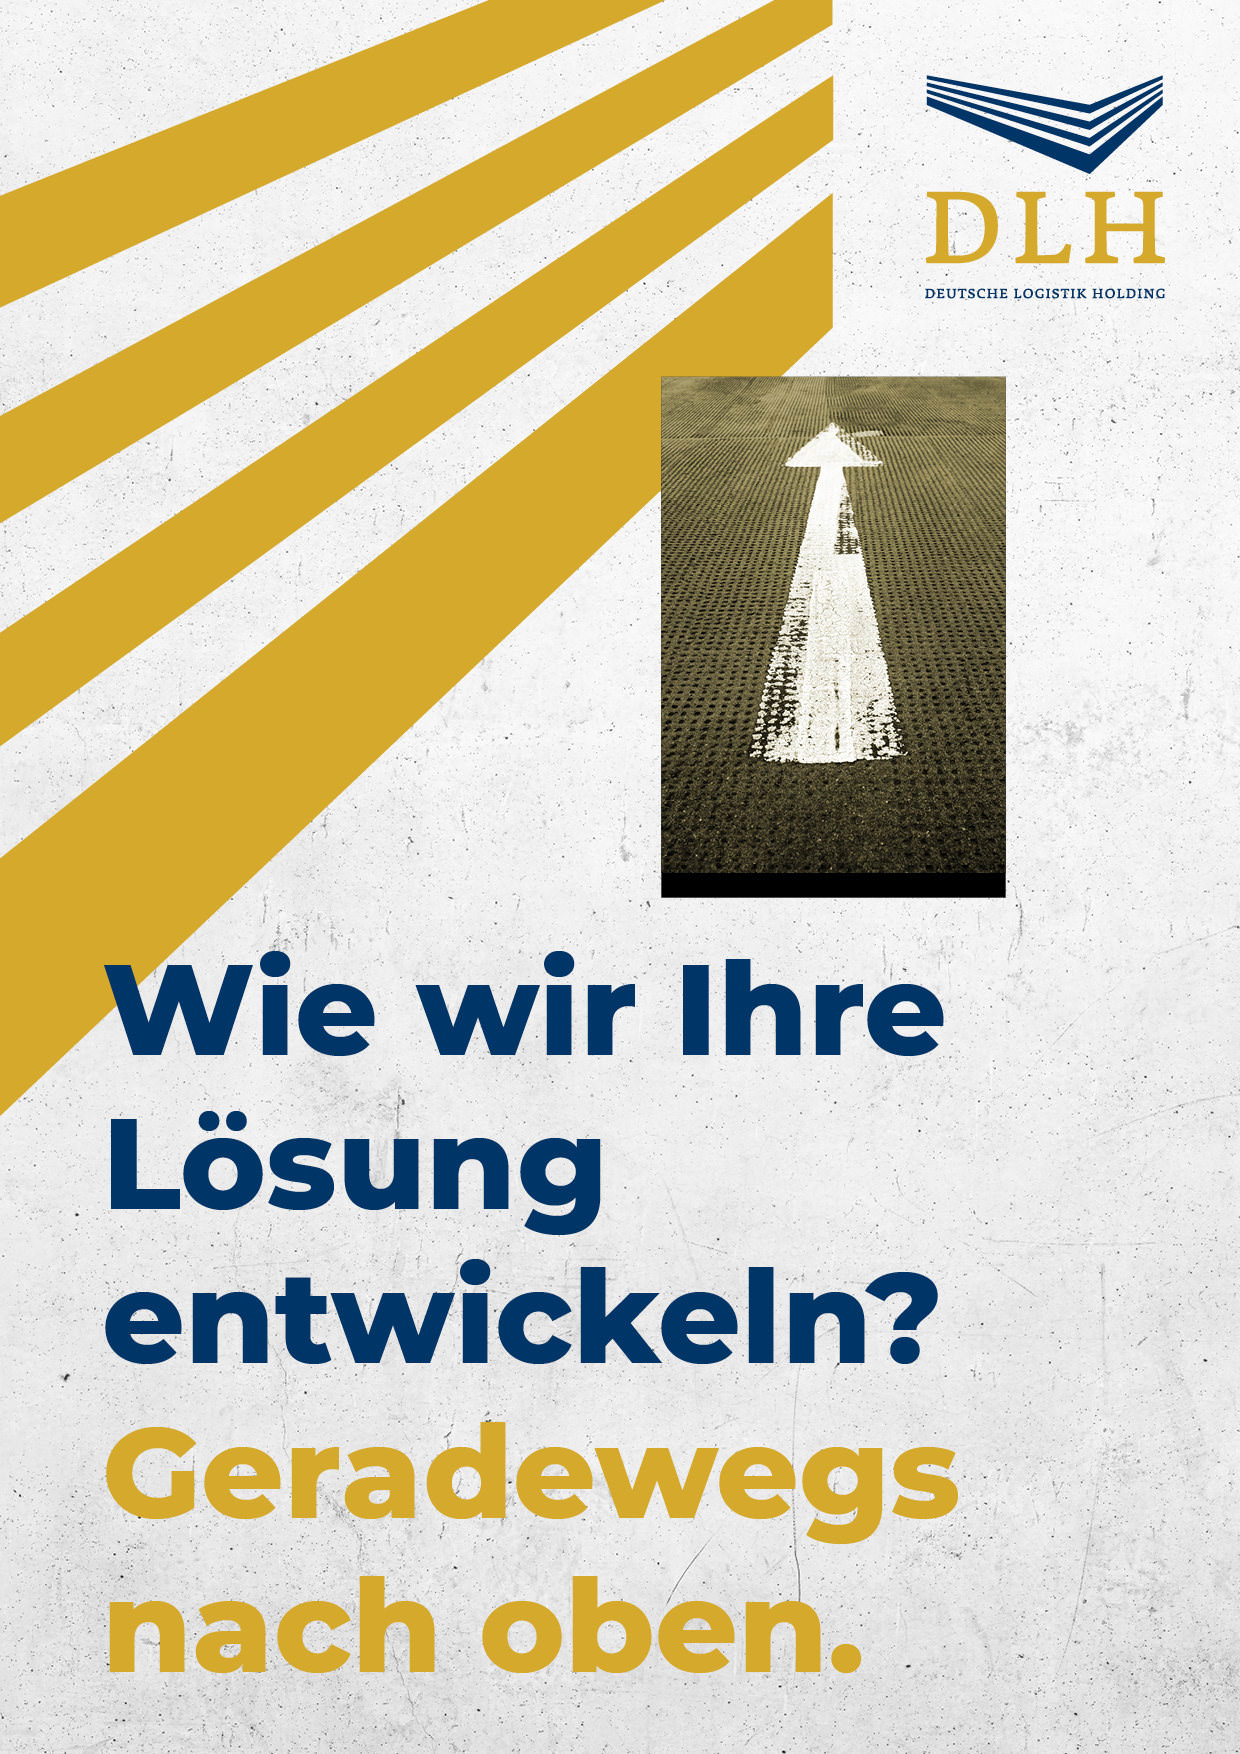 Elbe am Rhein Advertising showcase - DLH